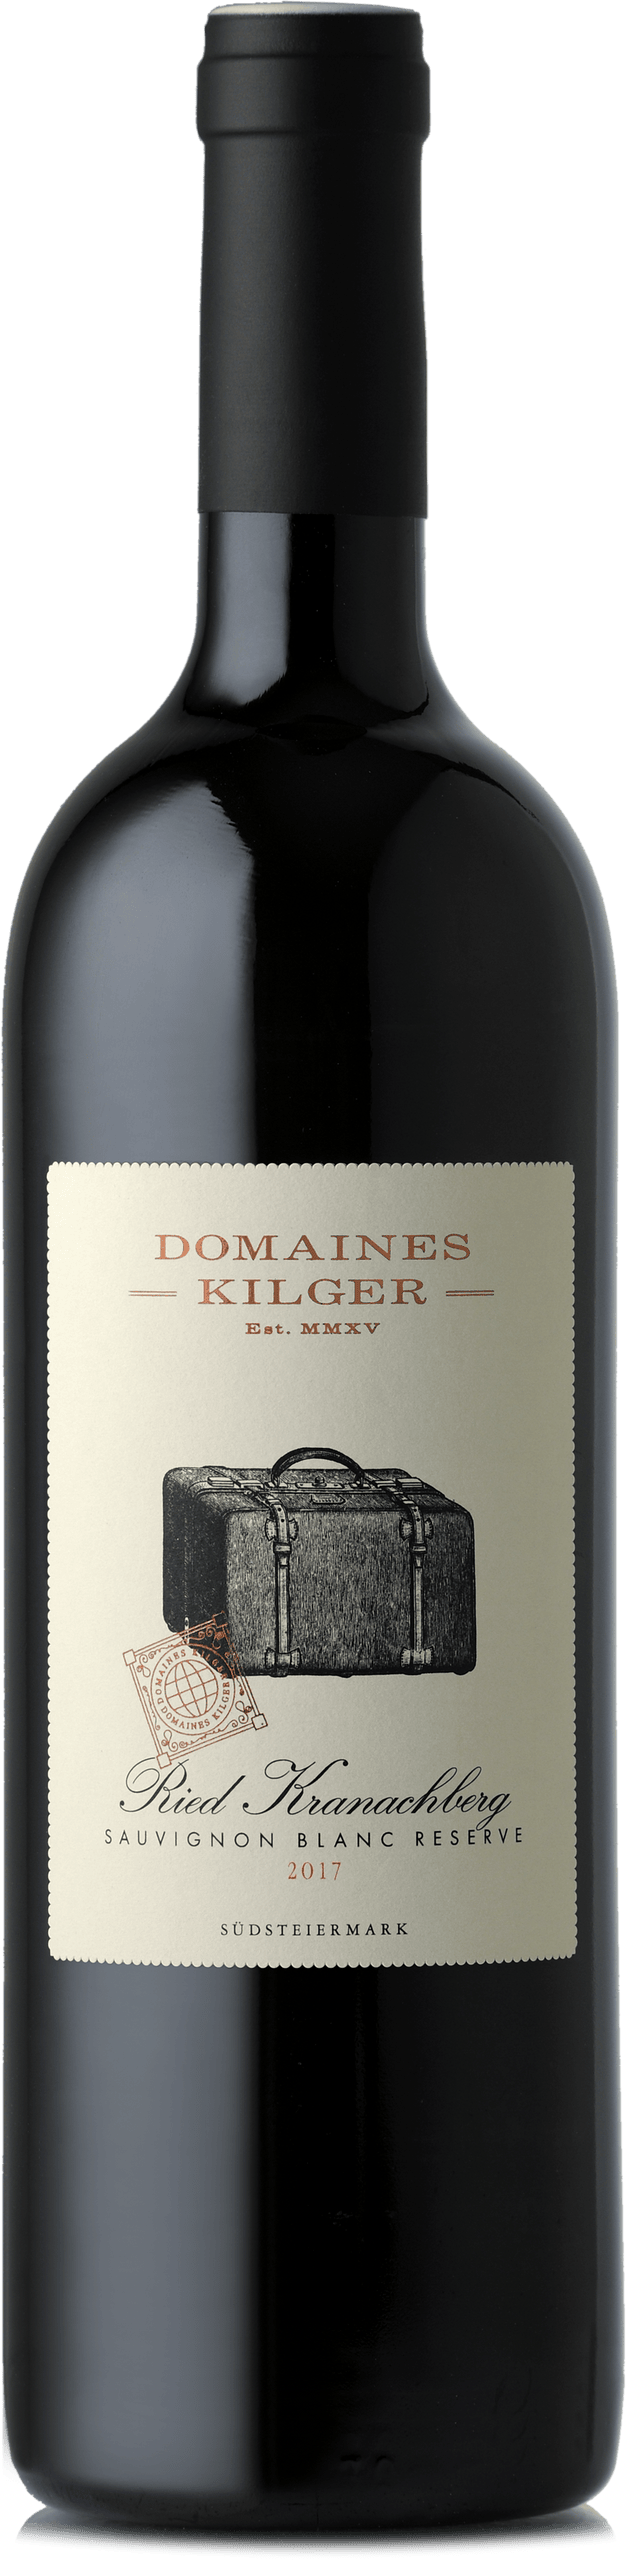 2017 Sauvignon Blanc Ried KRANACHBERG Reserve